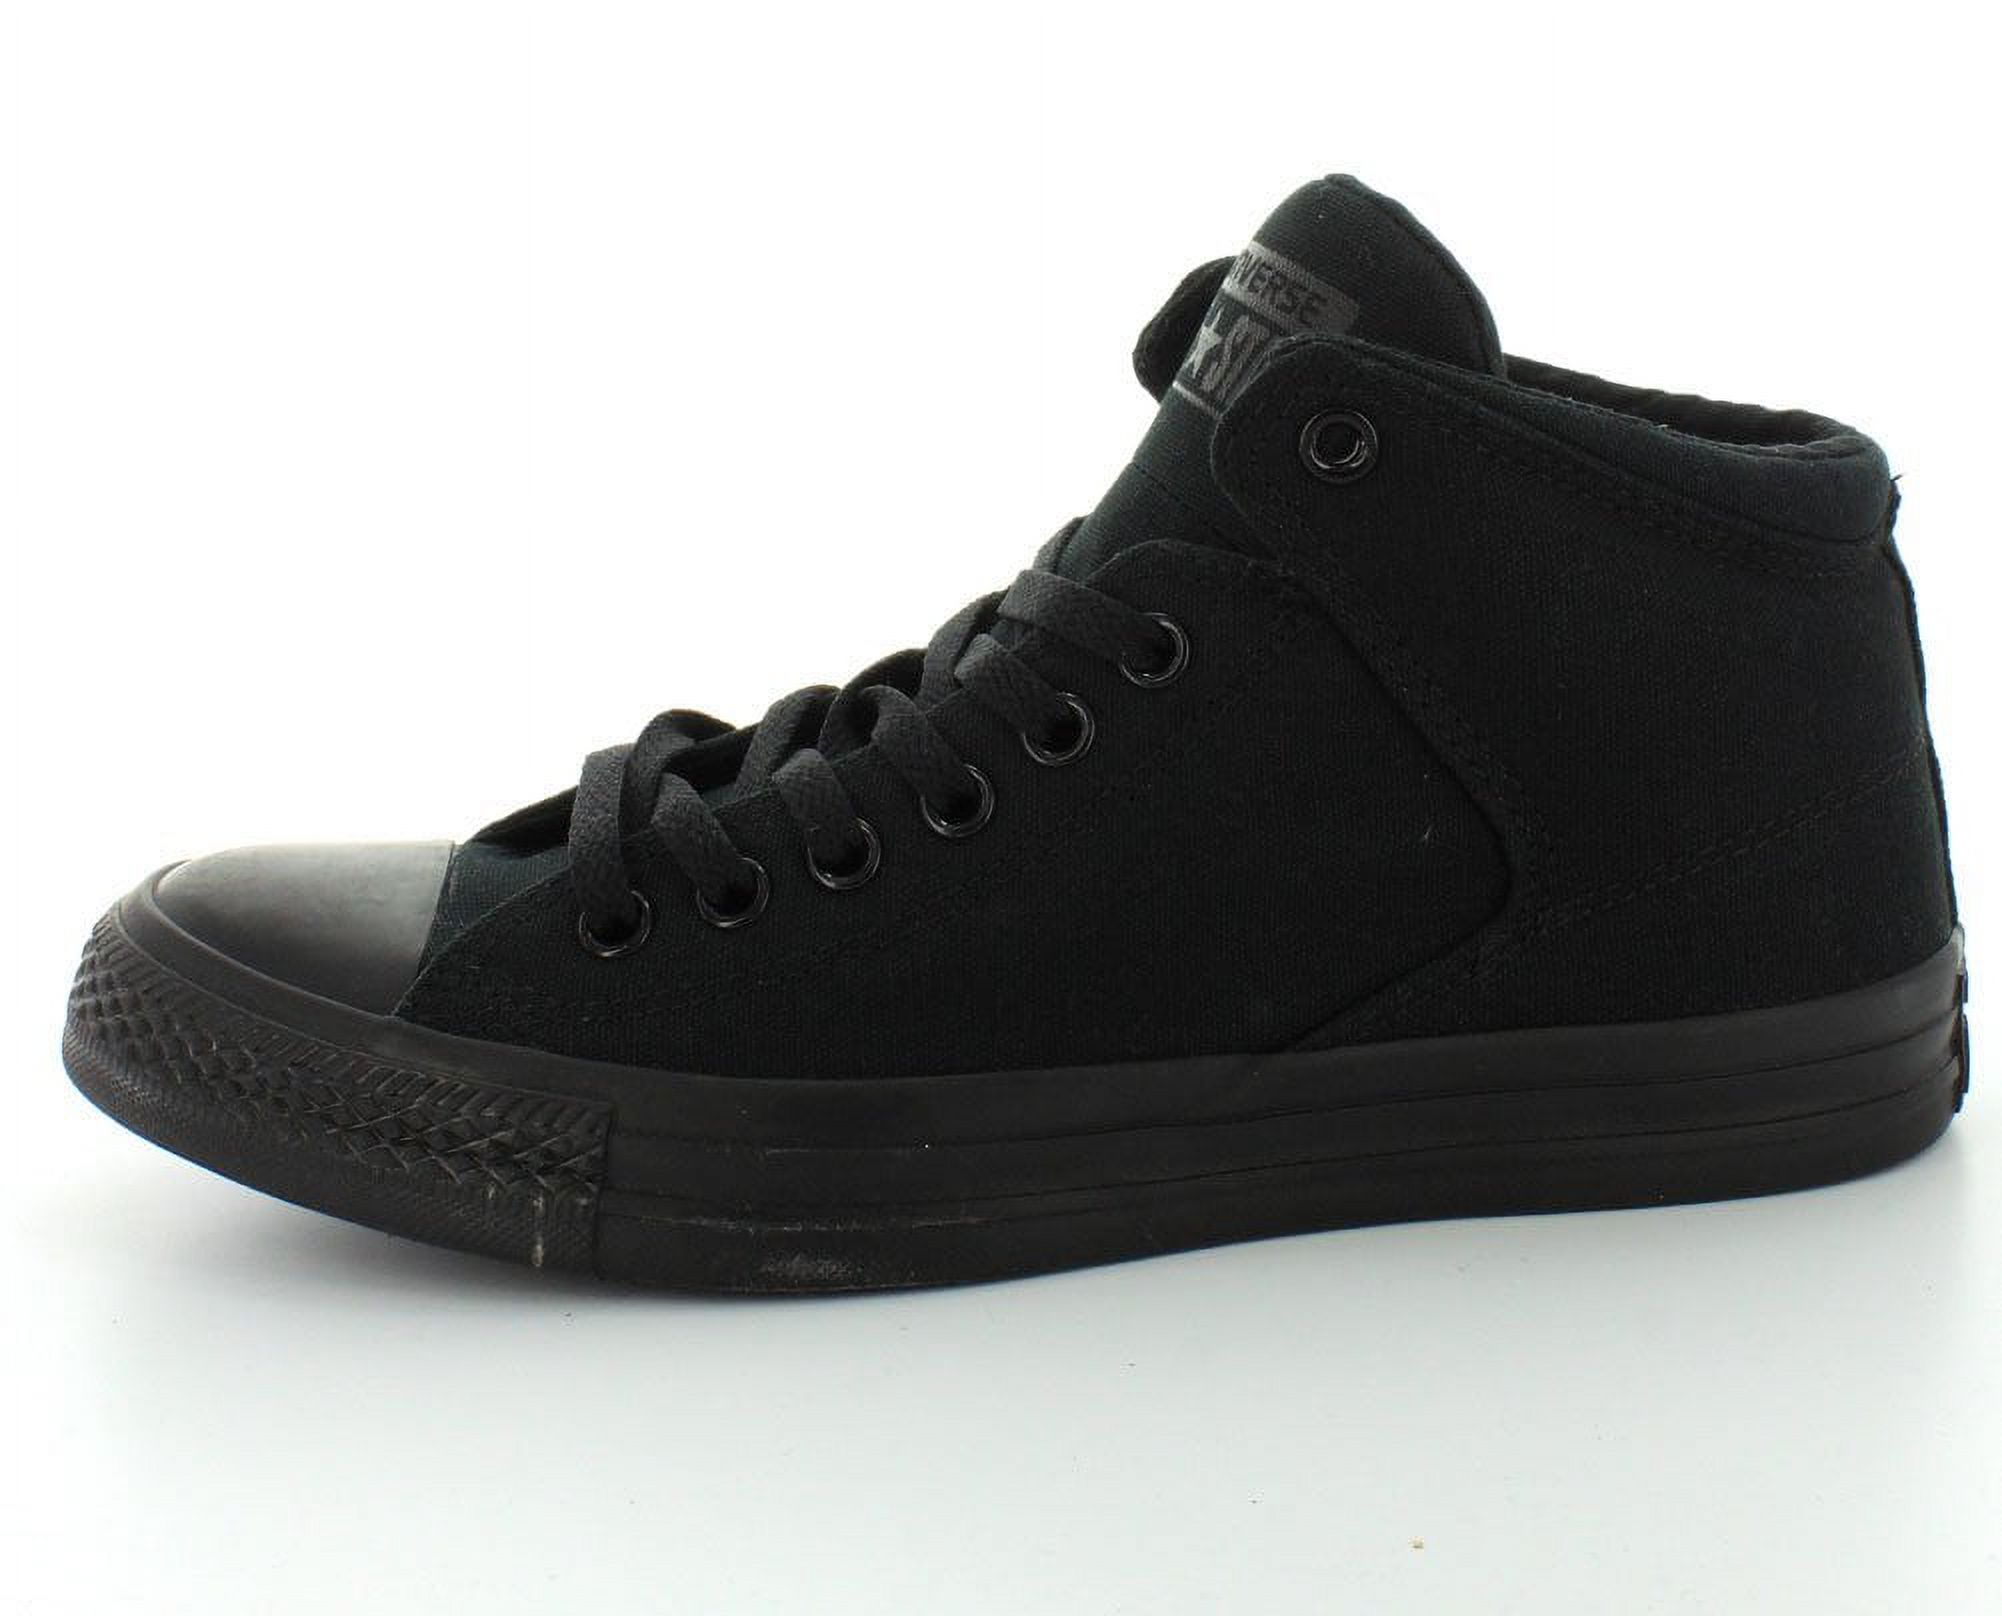 Converse Men's Street Canvas High Top Sneaker, Black/Black/Black, 12 M US - image 2 of 5